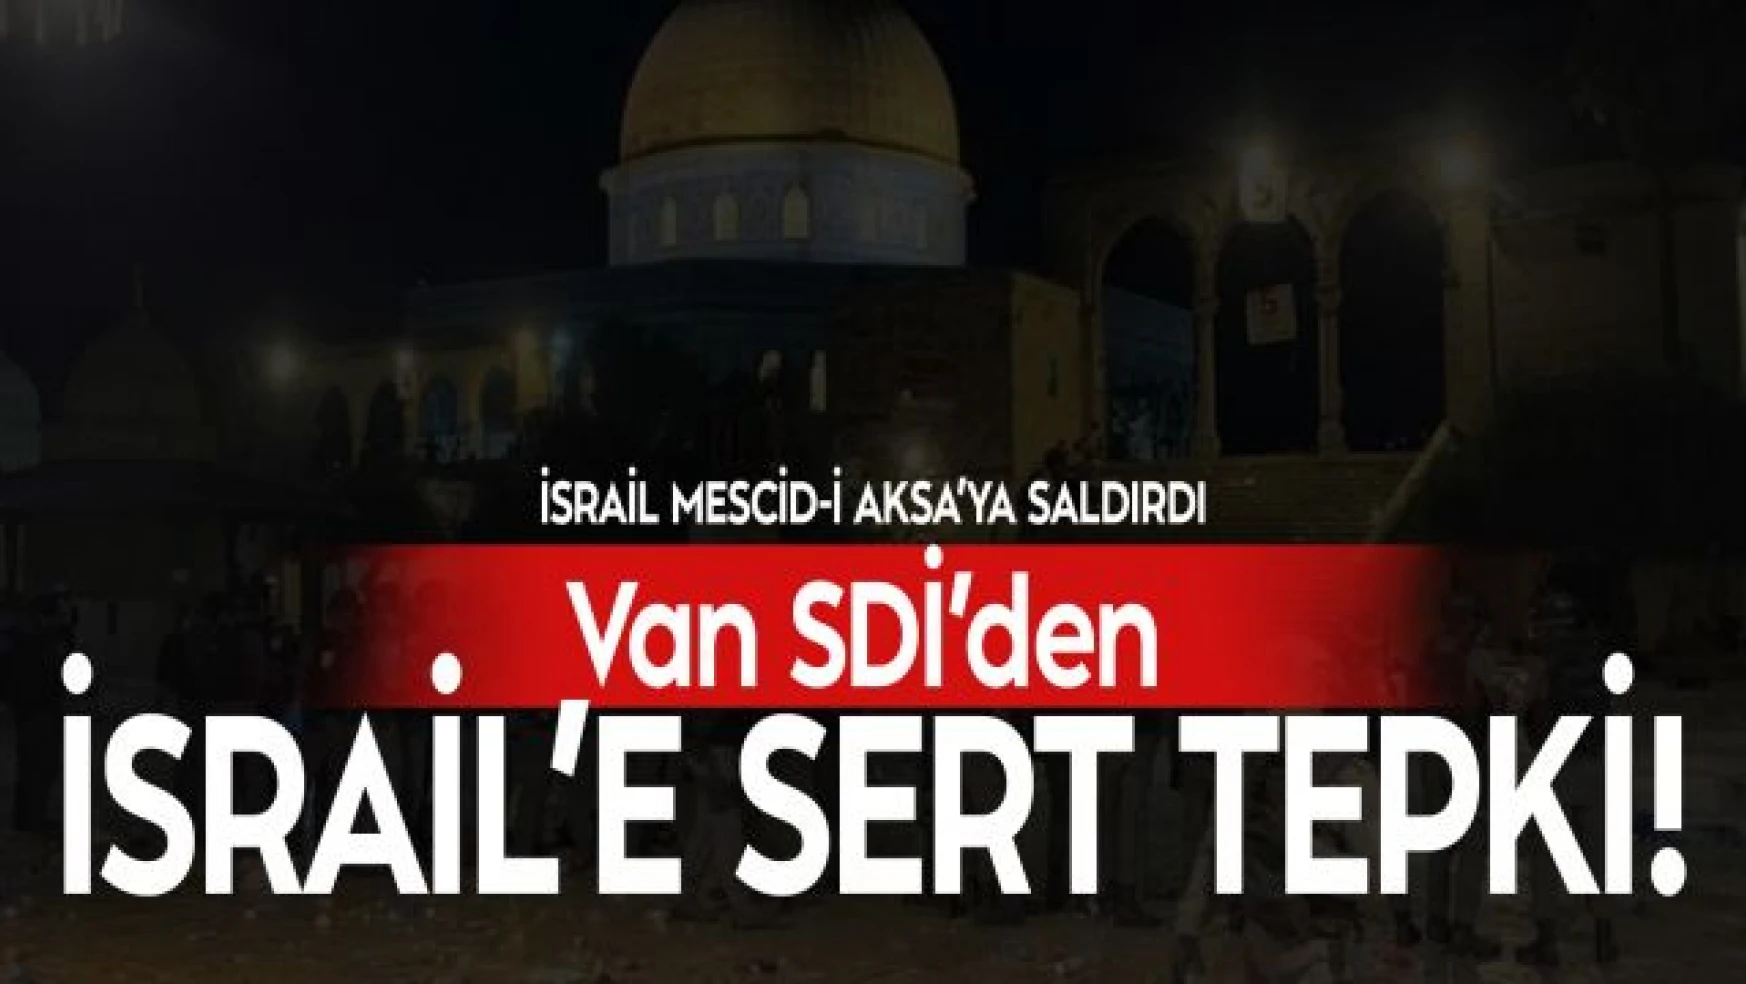 Van SDİ İsrail'in Mescid-i Aksa'ya saldırısına sert tepki gösterdi